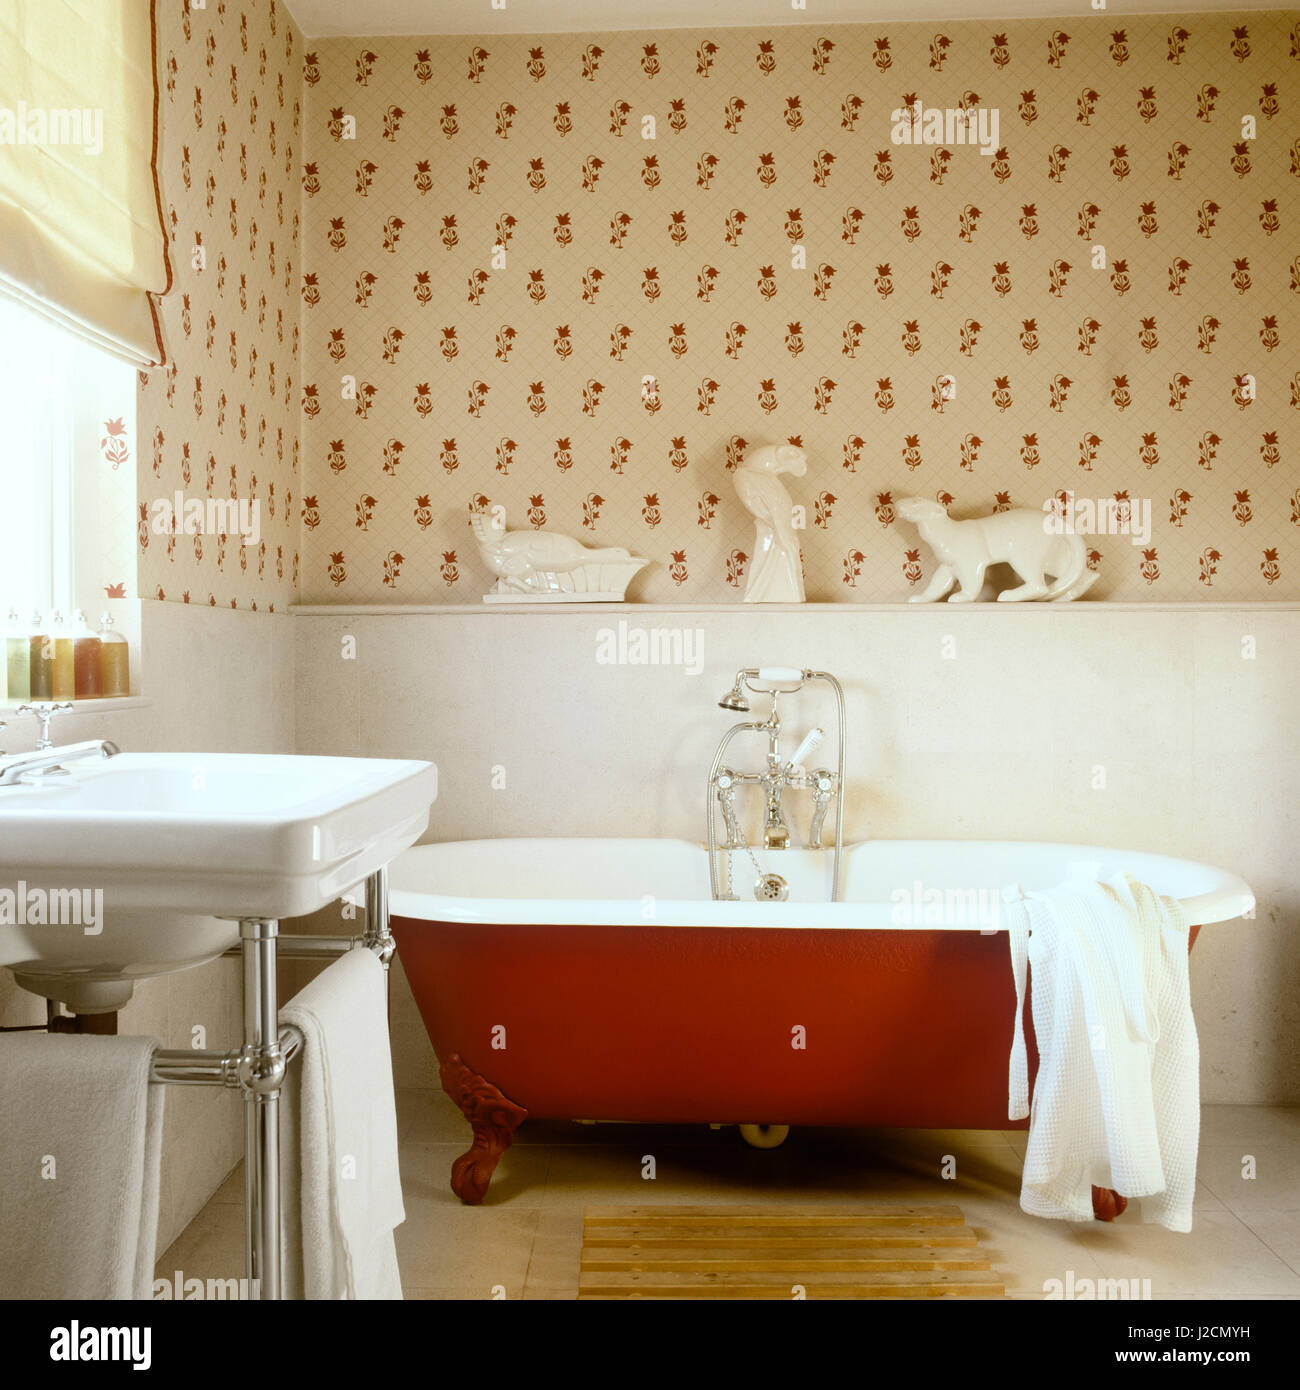 Country style bathroom. Stock Photo